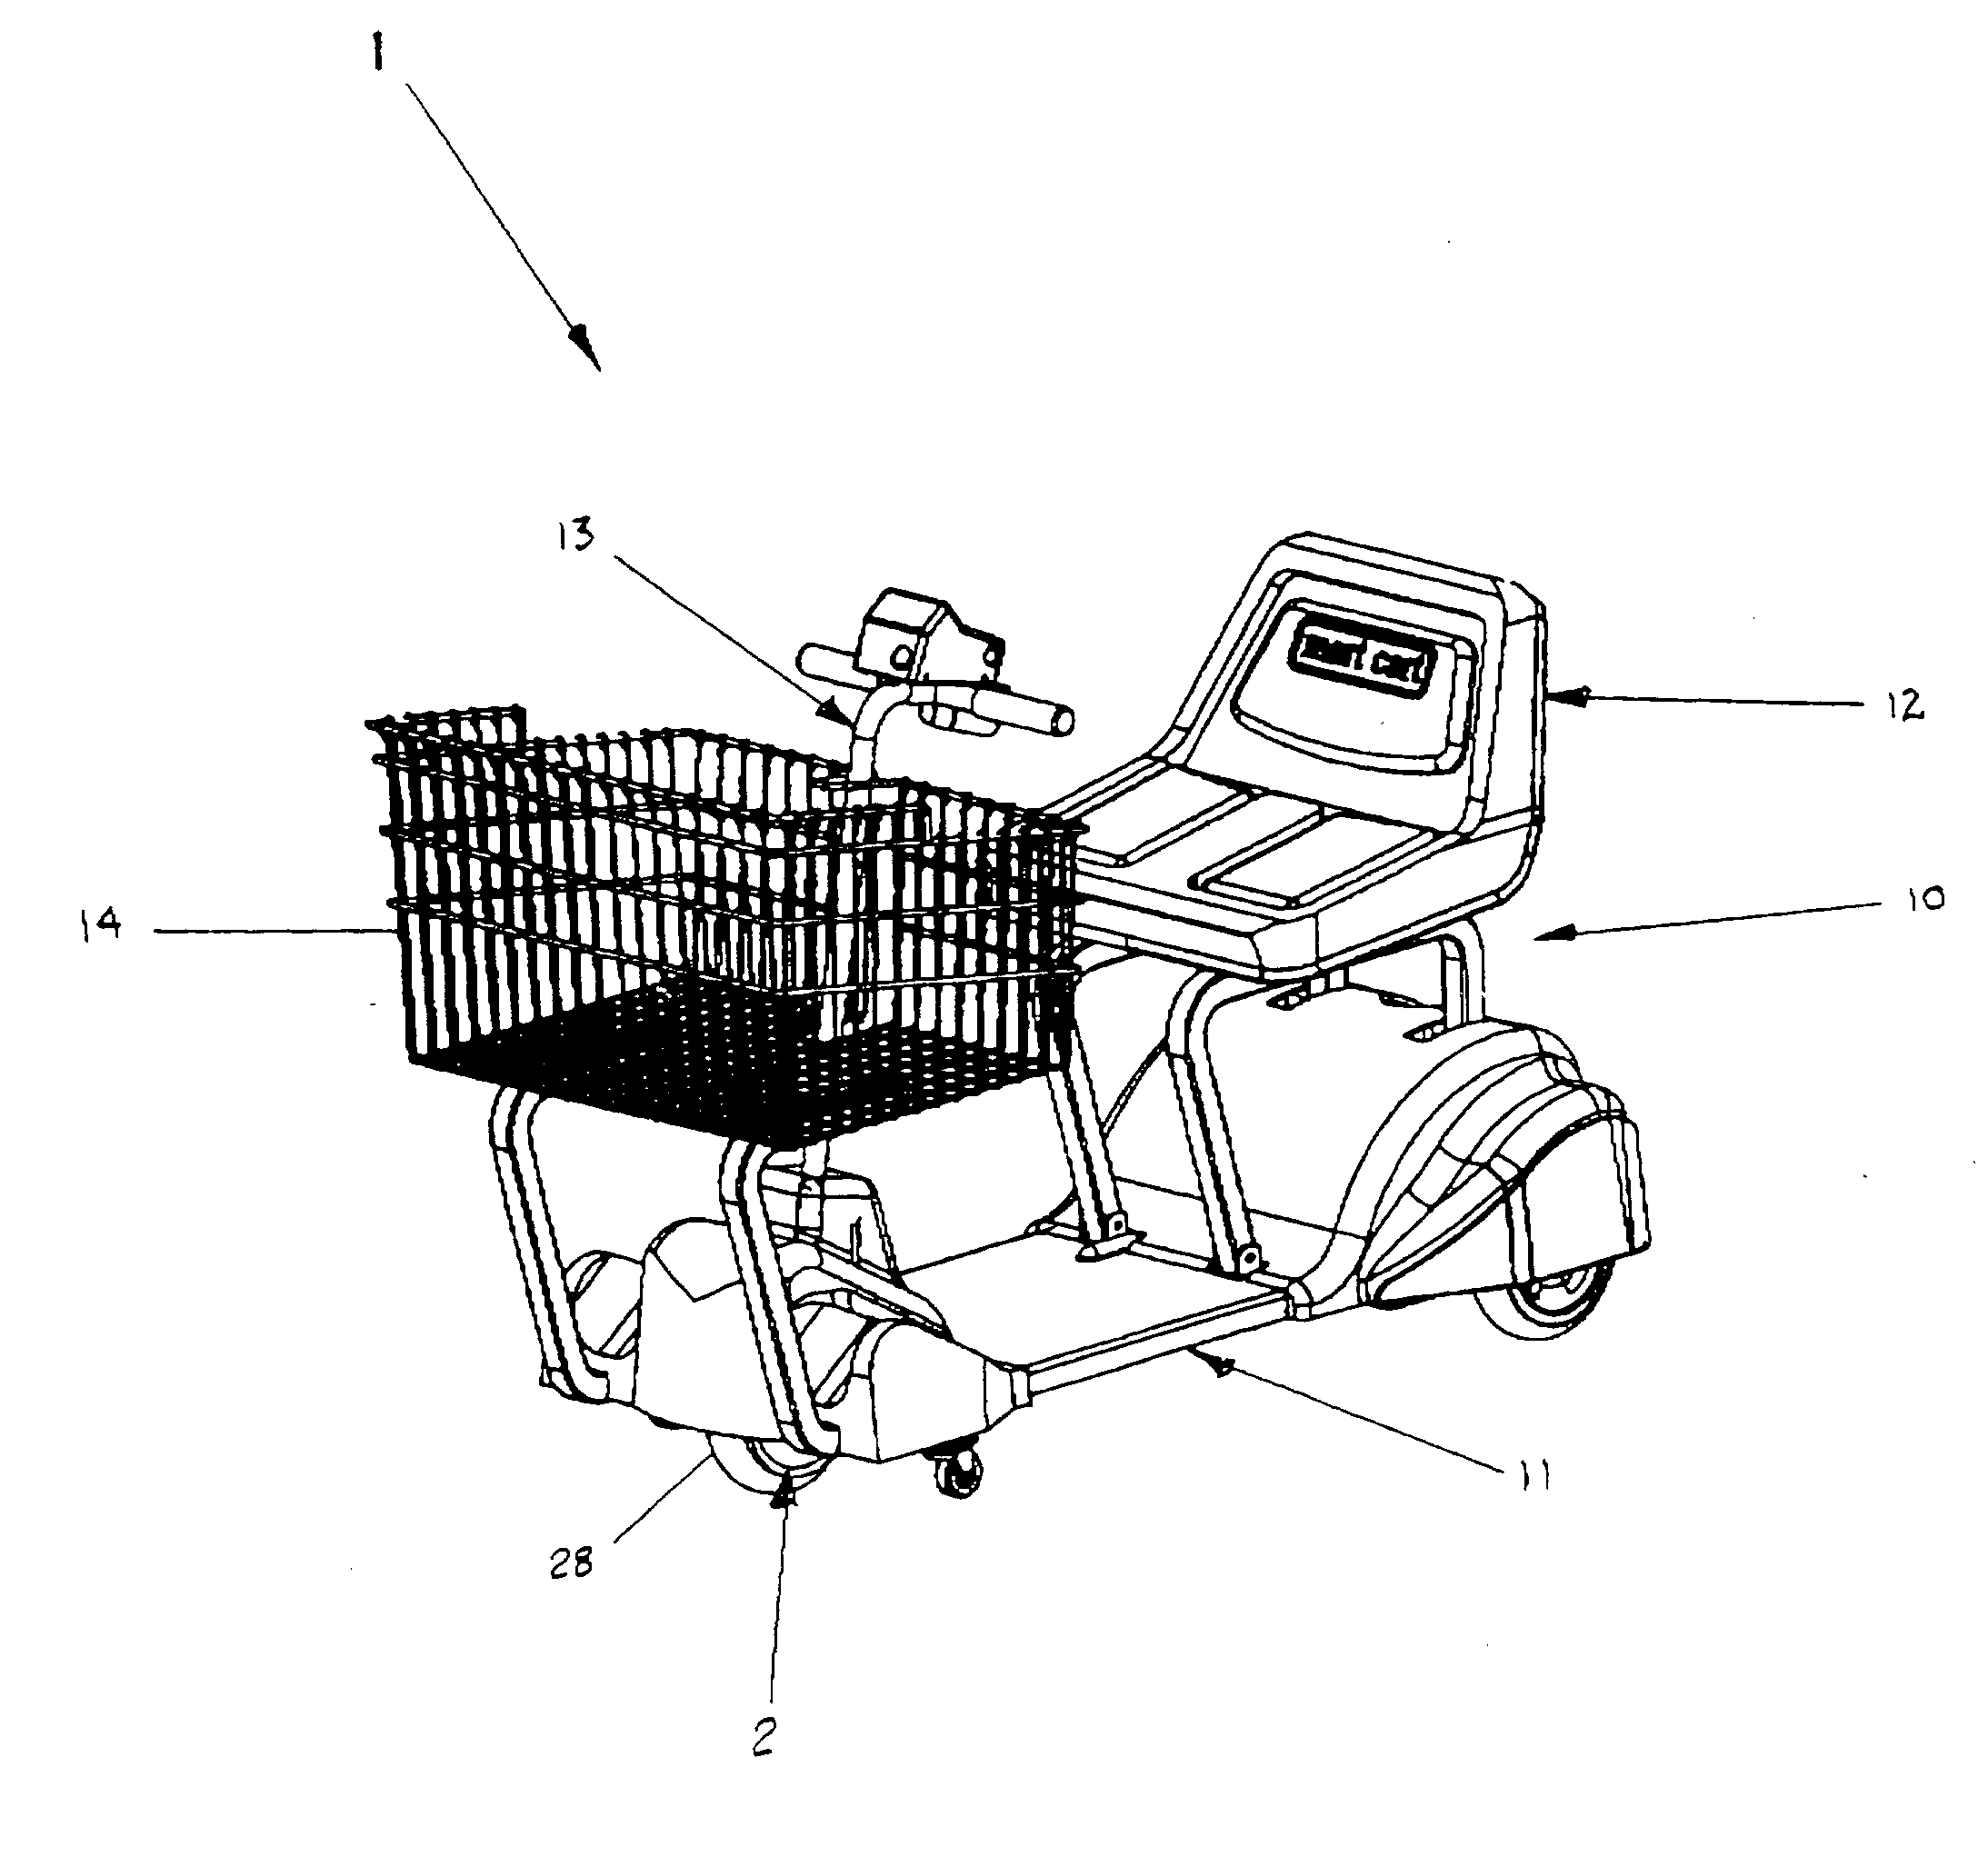 Motorized cart with hub gear motor system